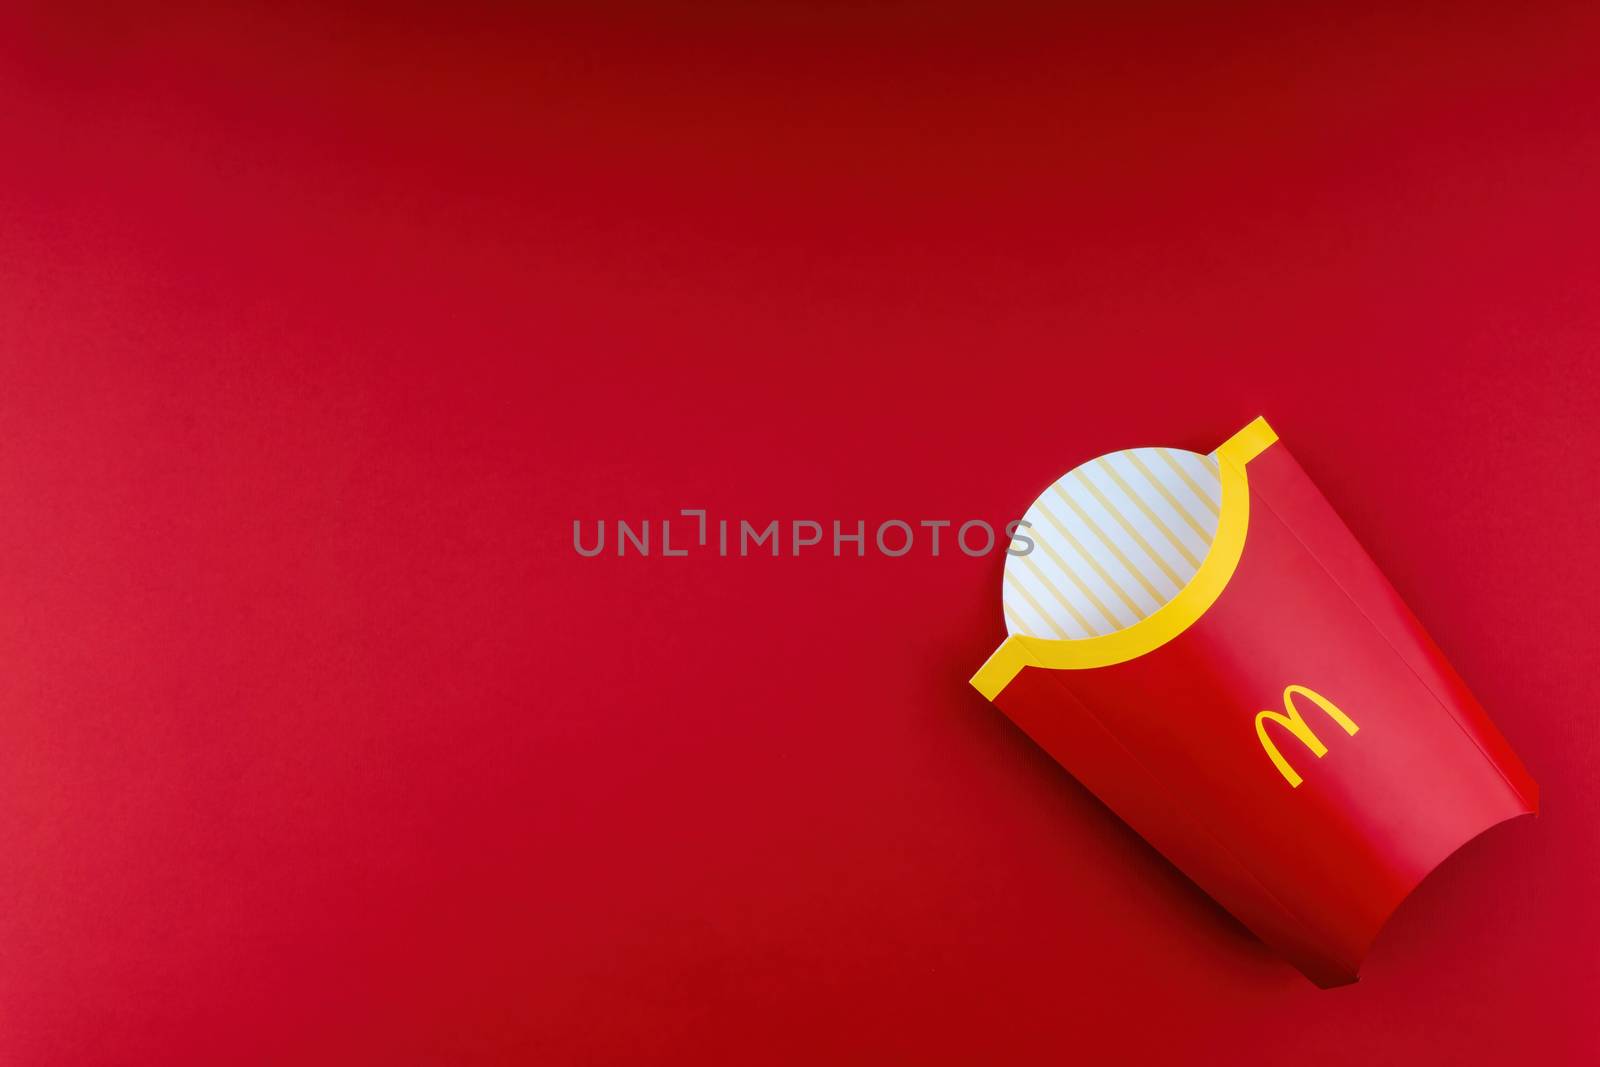 Kuala Lumpur, Malaysia - October 20, 2020 : McDonalds french fries box on red background